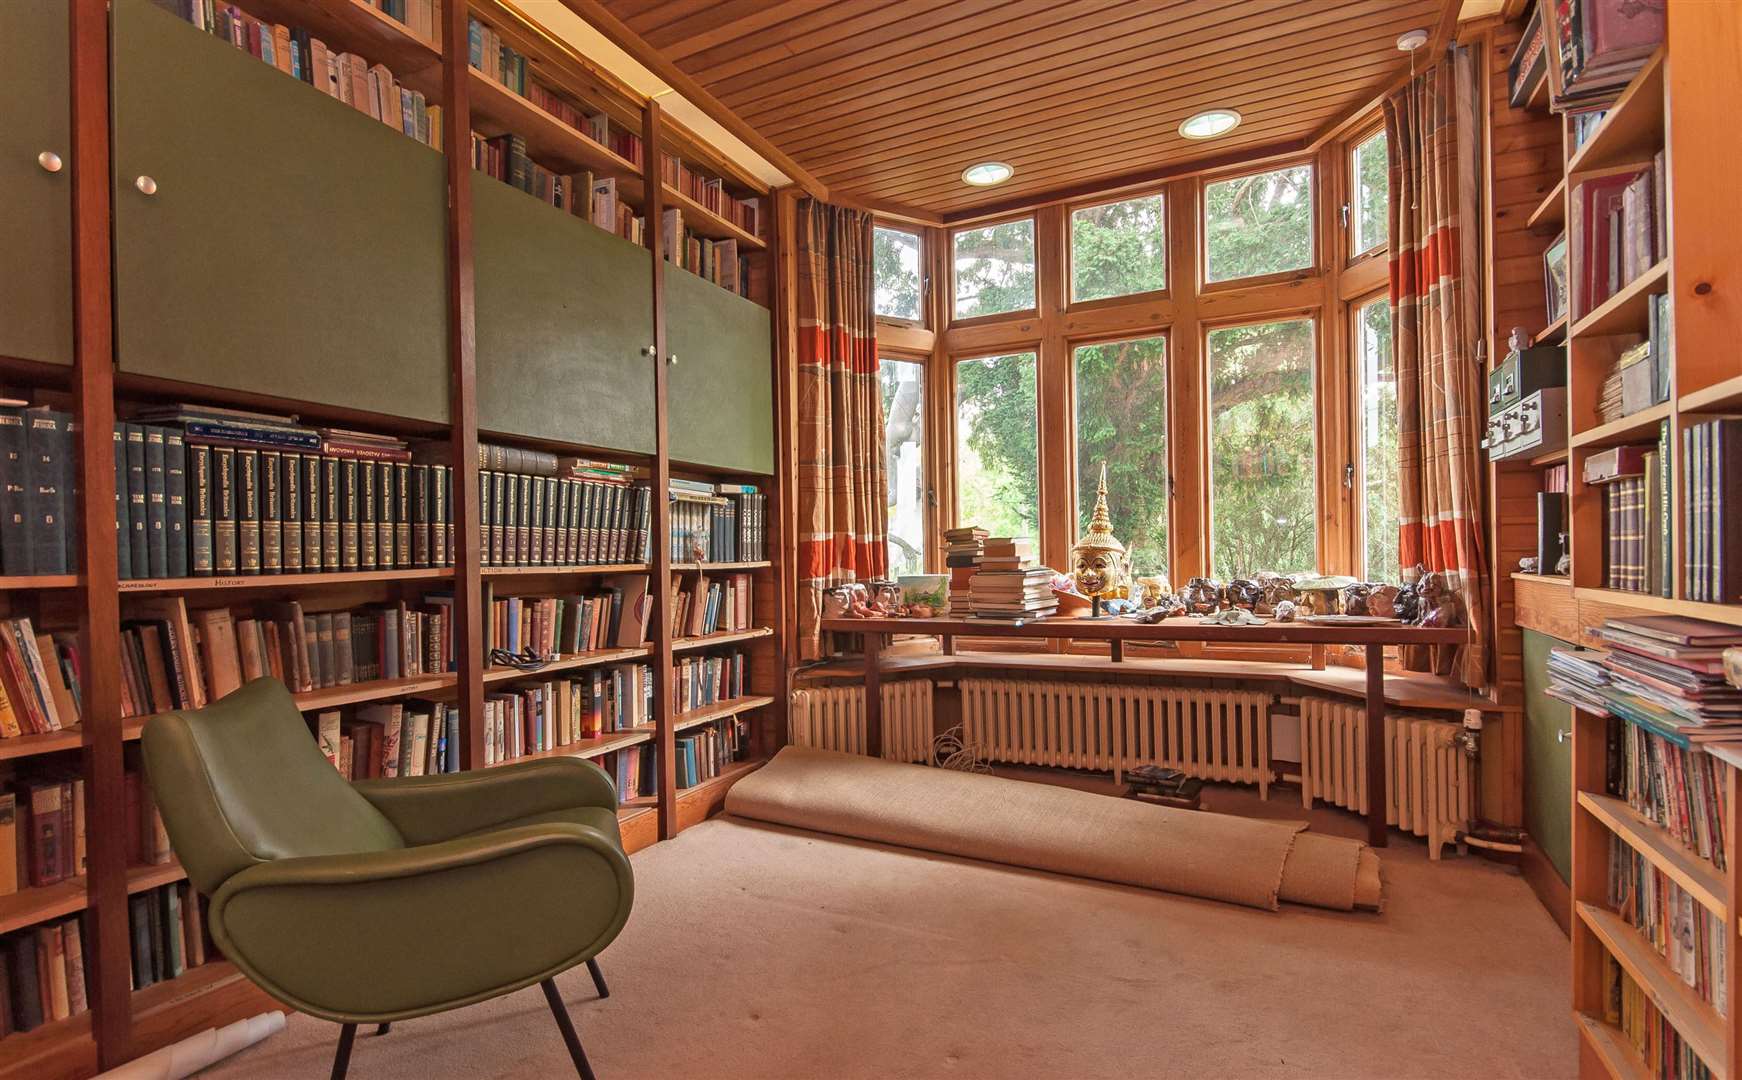 The library at Boley Hill House